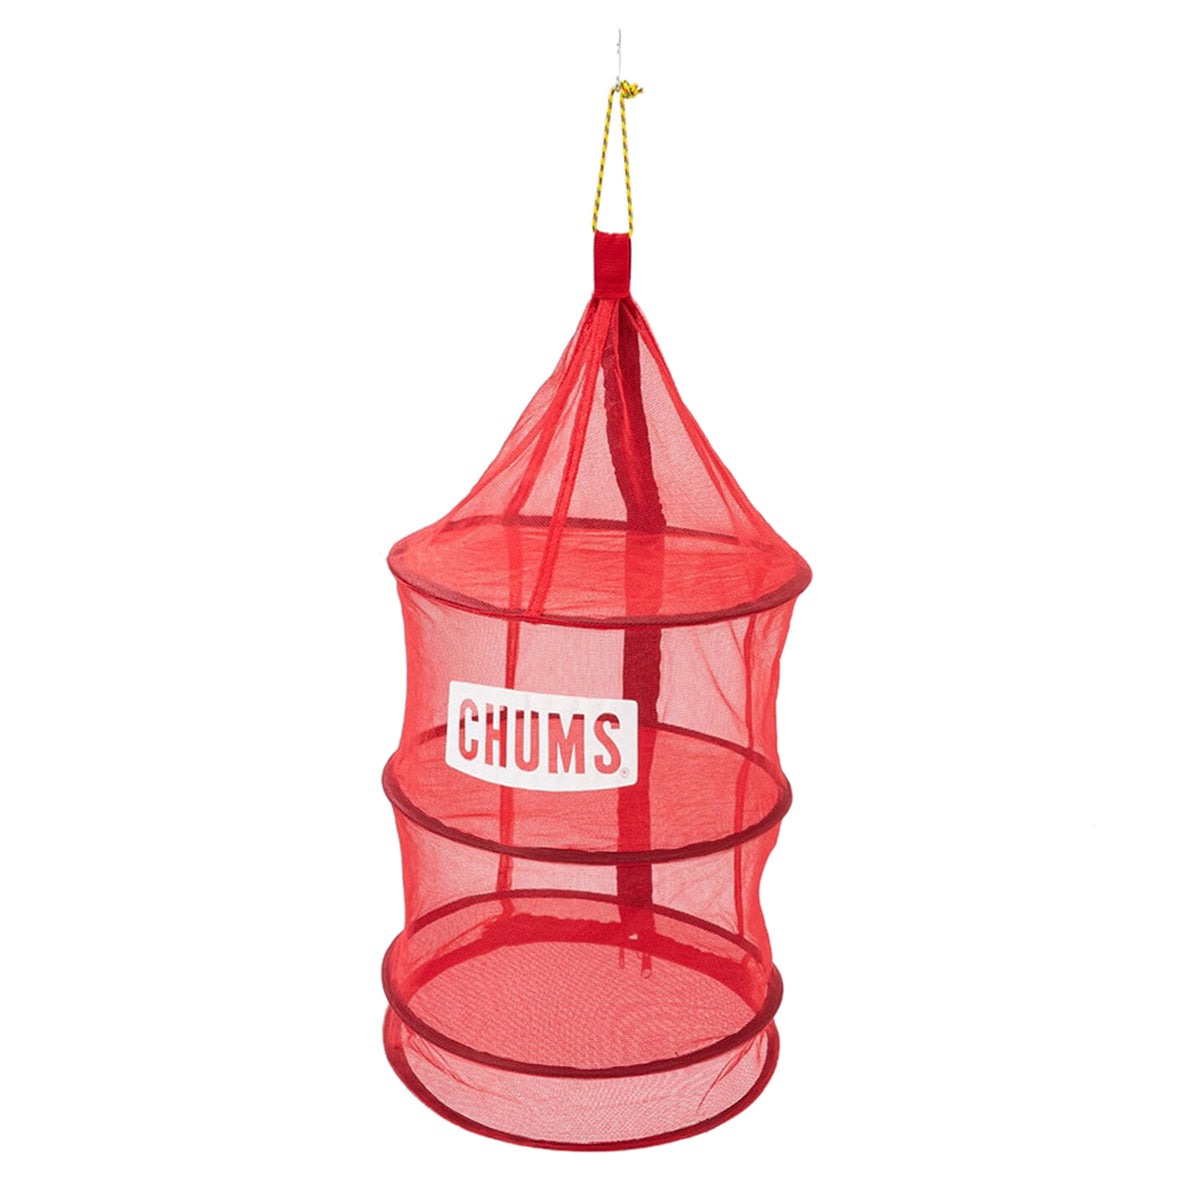 CHUMS | チャムス CHUMS Logo Hanging Dry Net